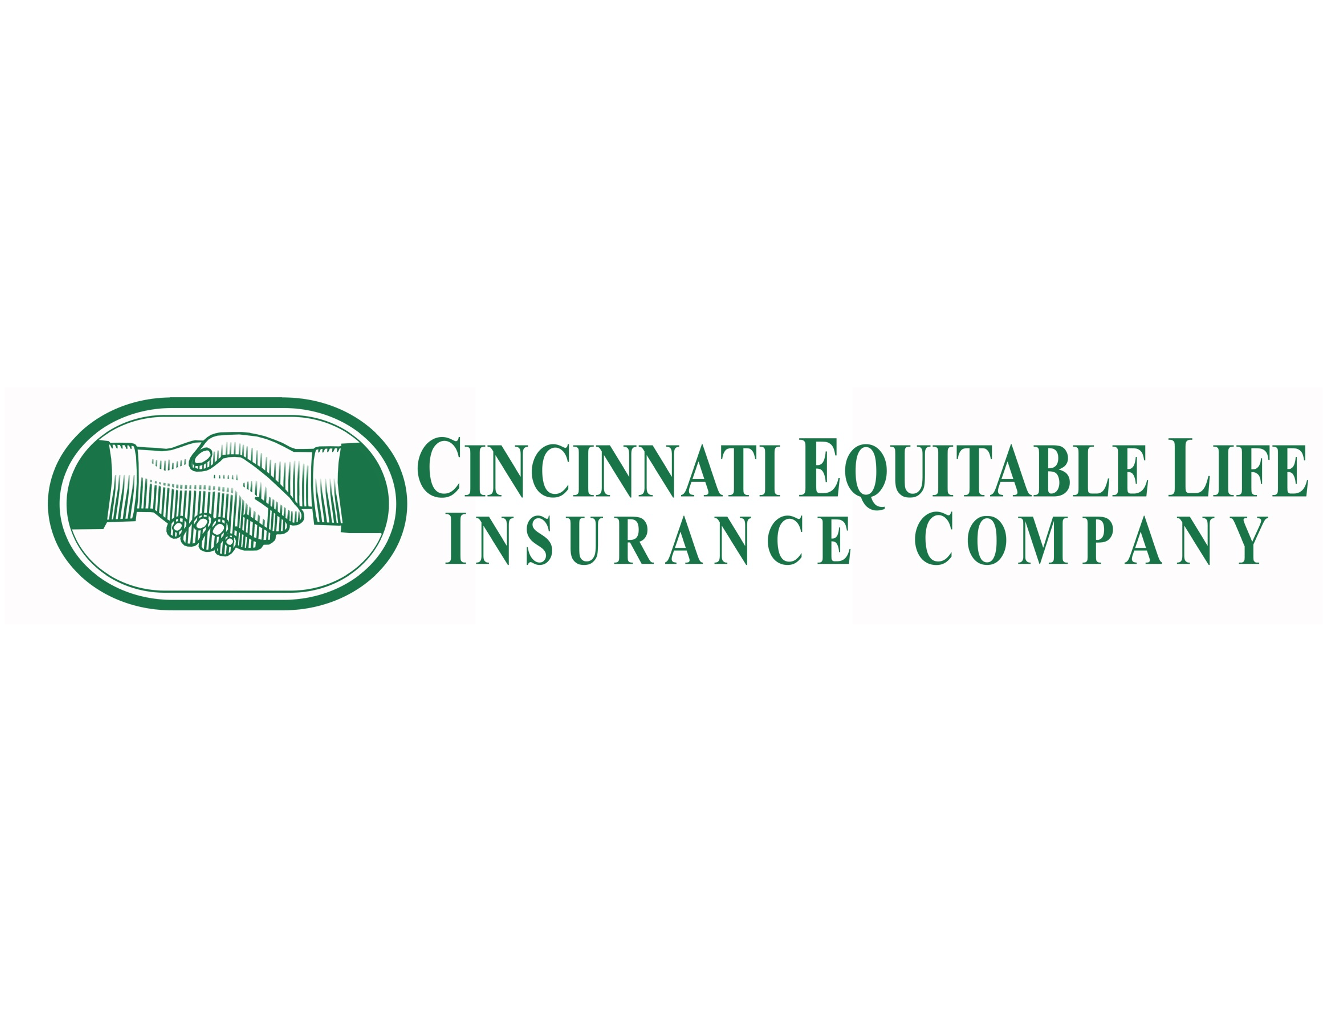 Cincinnati Equitable Life Insurance Company